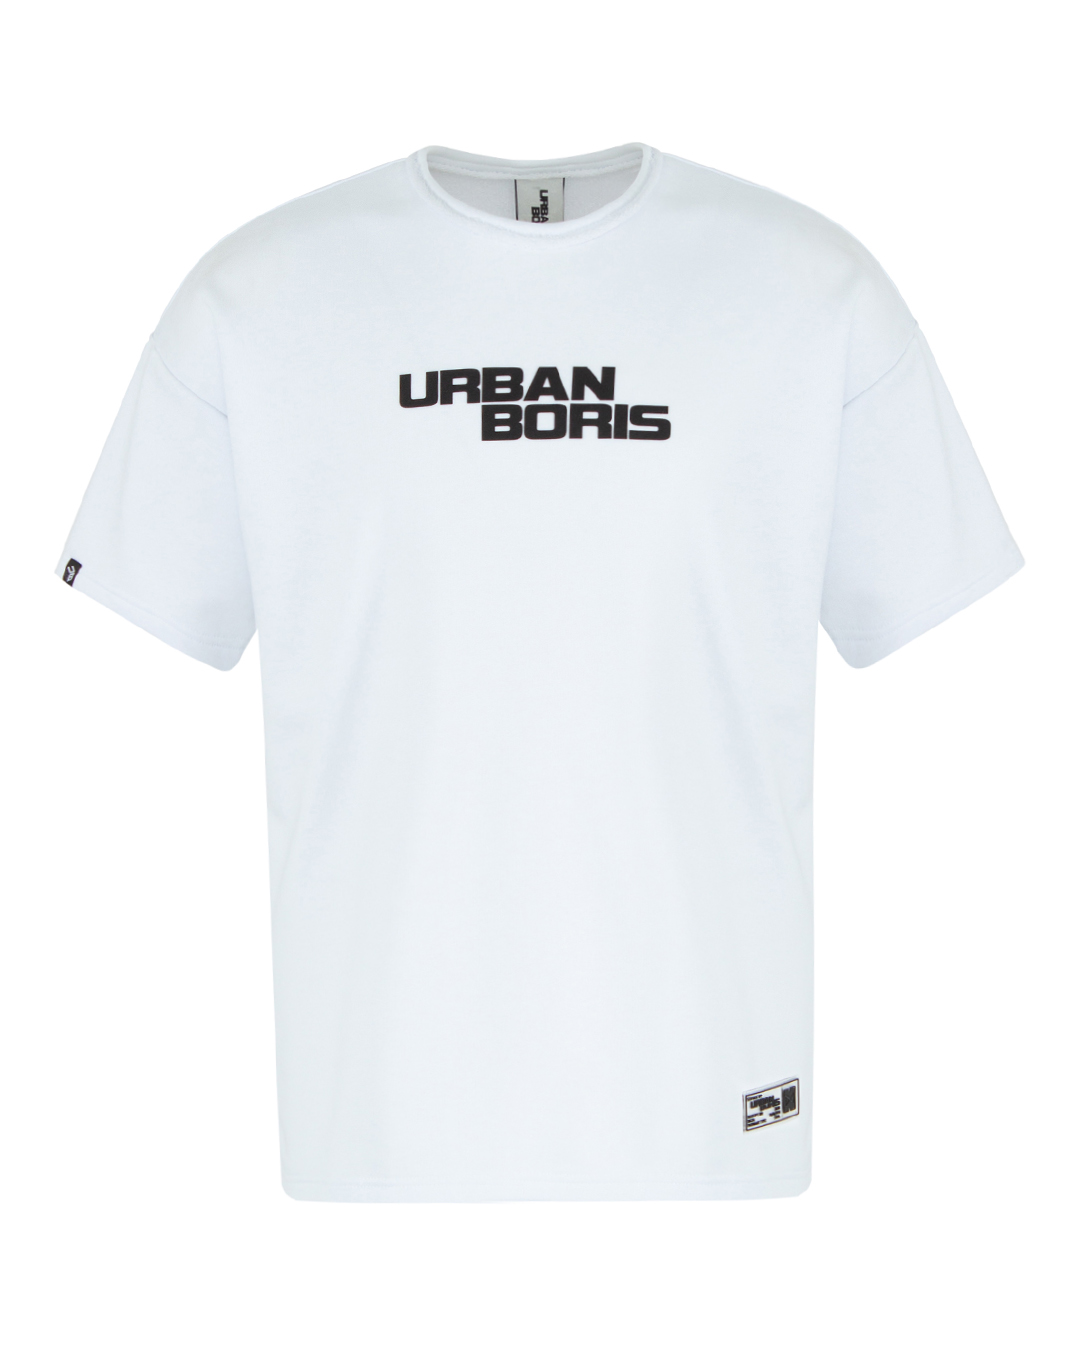 URBAN BORIS с логотипом бренда  артикул  марки URBAN BORIS купить за 13900 руб.